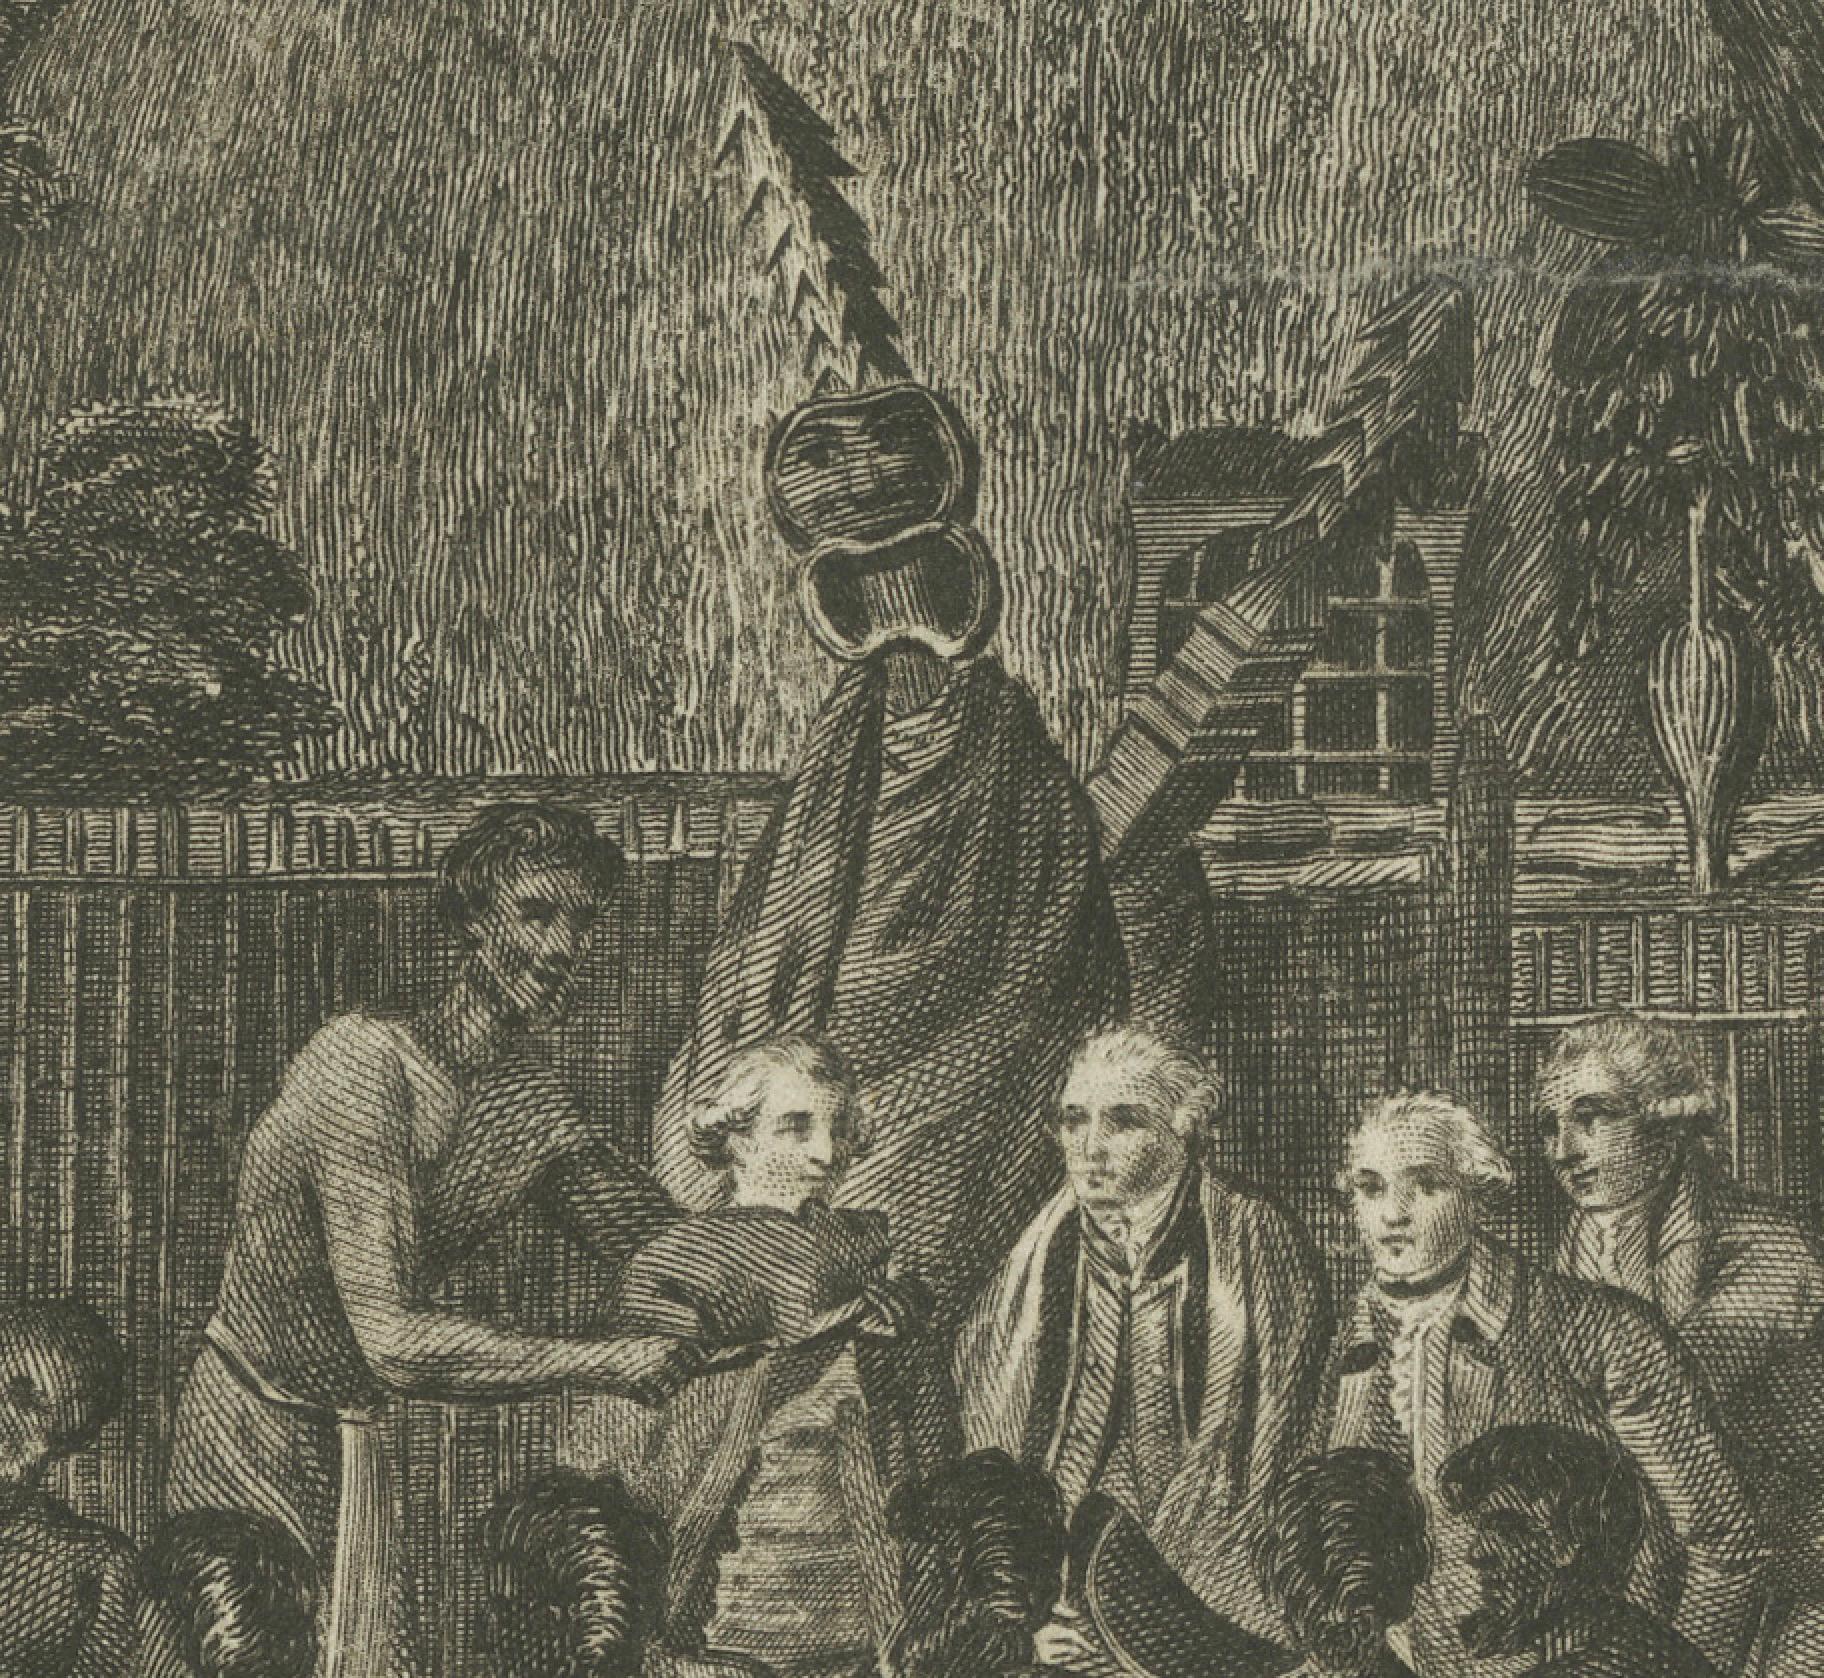 Zeremonieller Tribut an Kapitän Cook im hawaiianischen Archipel, um 1790 (18. Jahrhundert) im Angebot